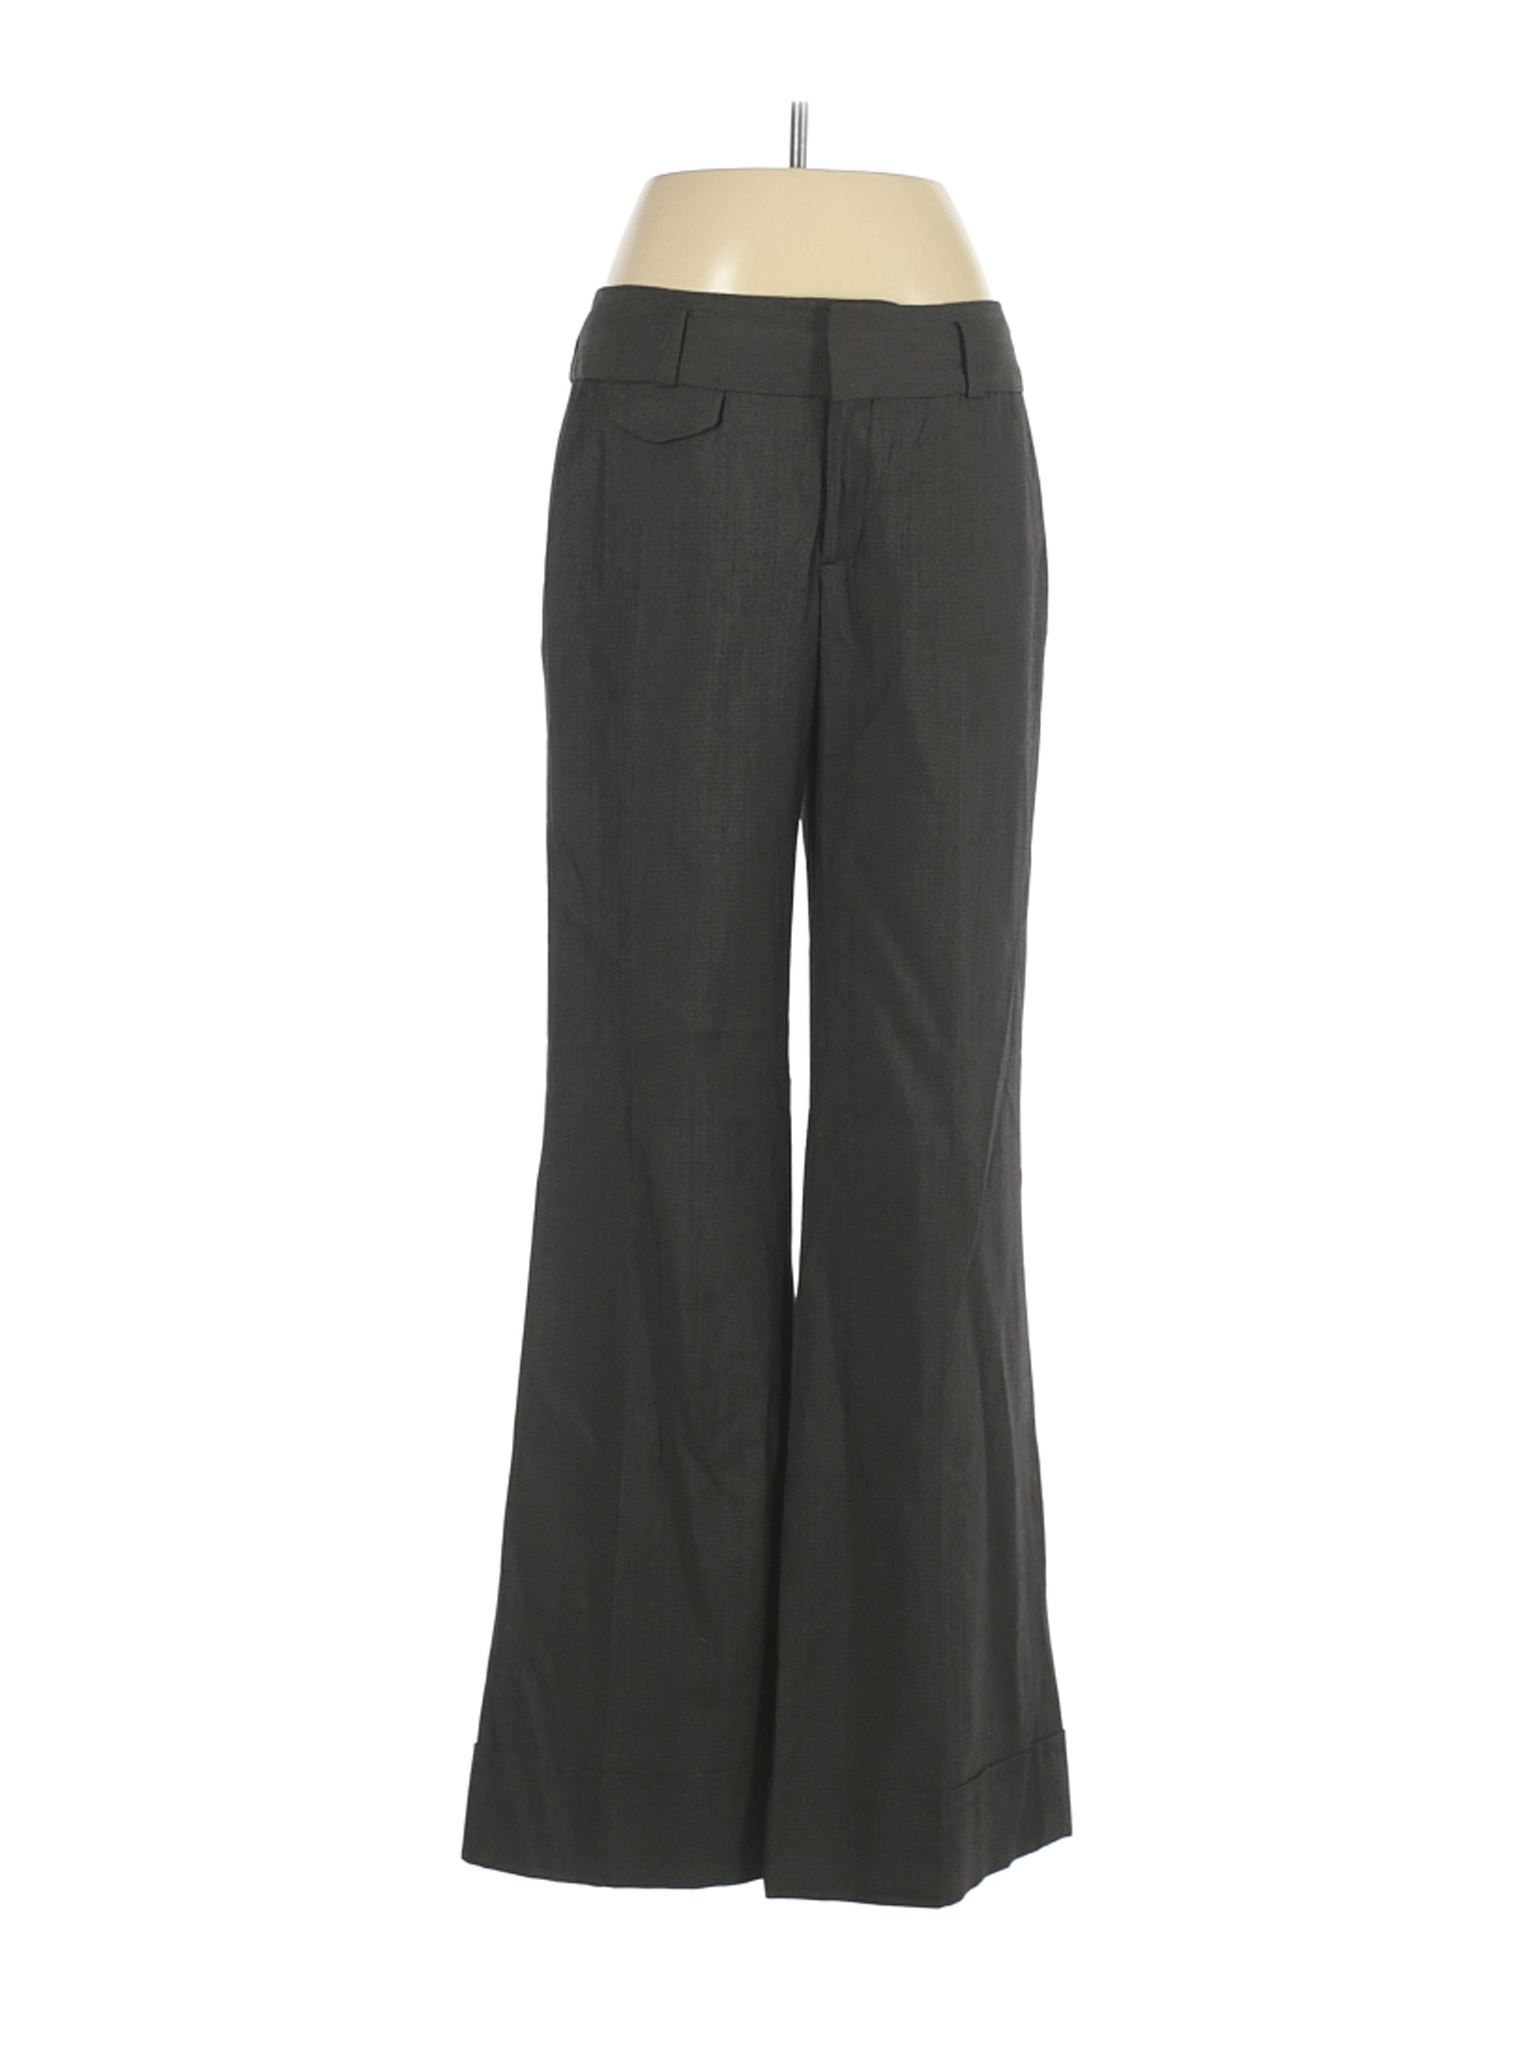 Banana Republic Women Black Dress Pants 6 | eBay